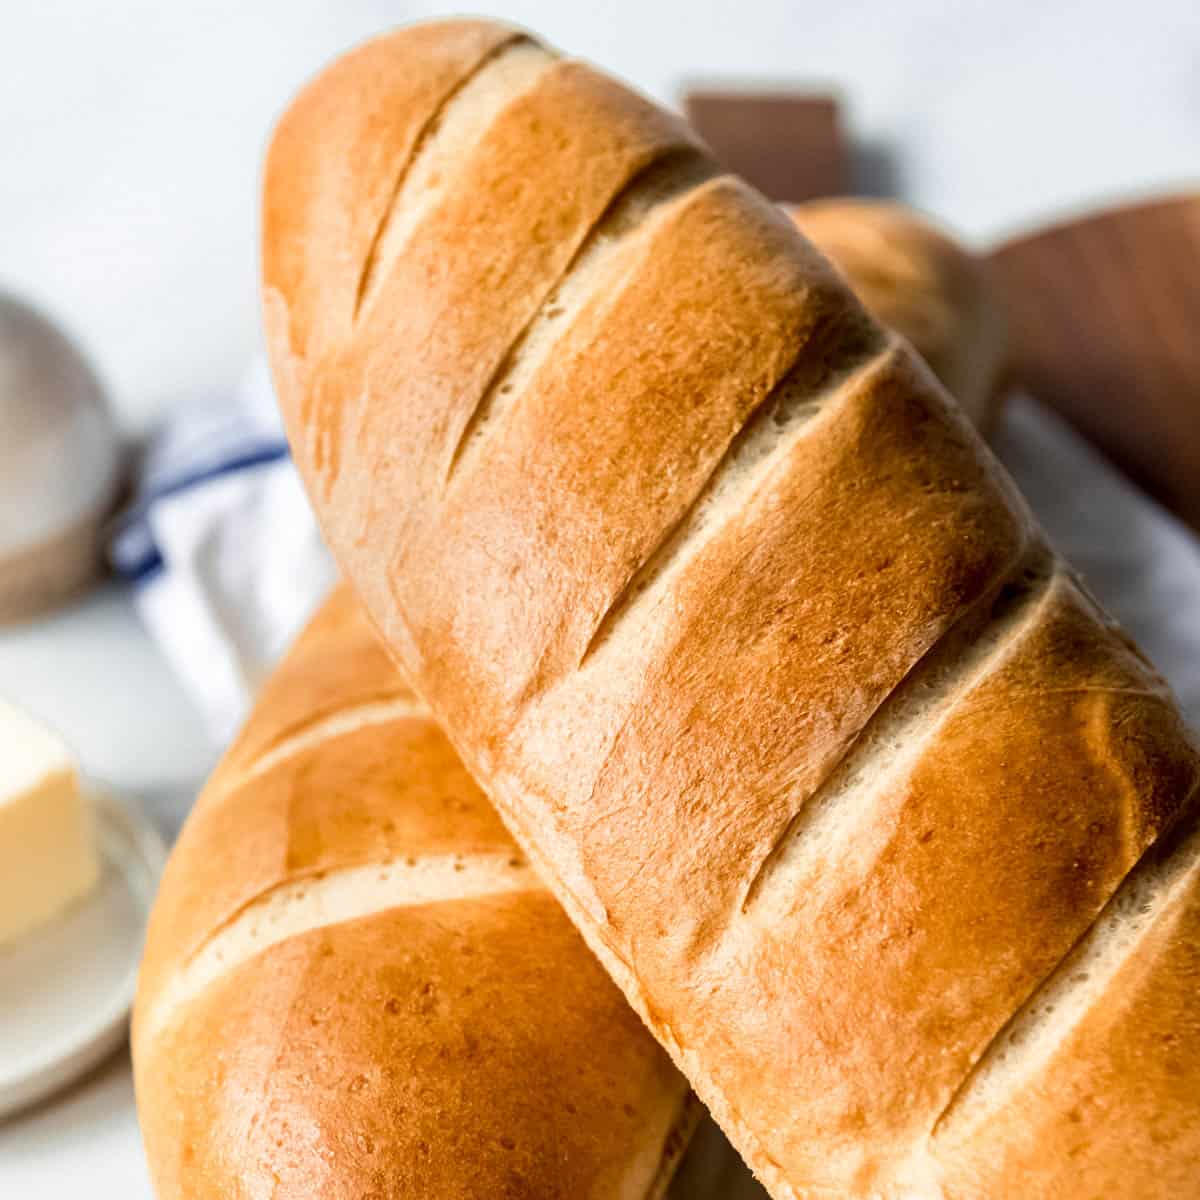 https://houseofnasheats.com/wp-content/uploads/2022/02/French-Bread-1.jpg